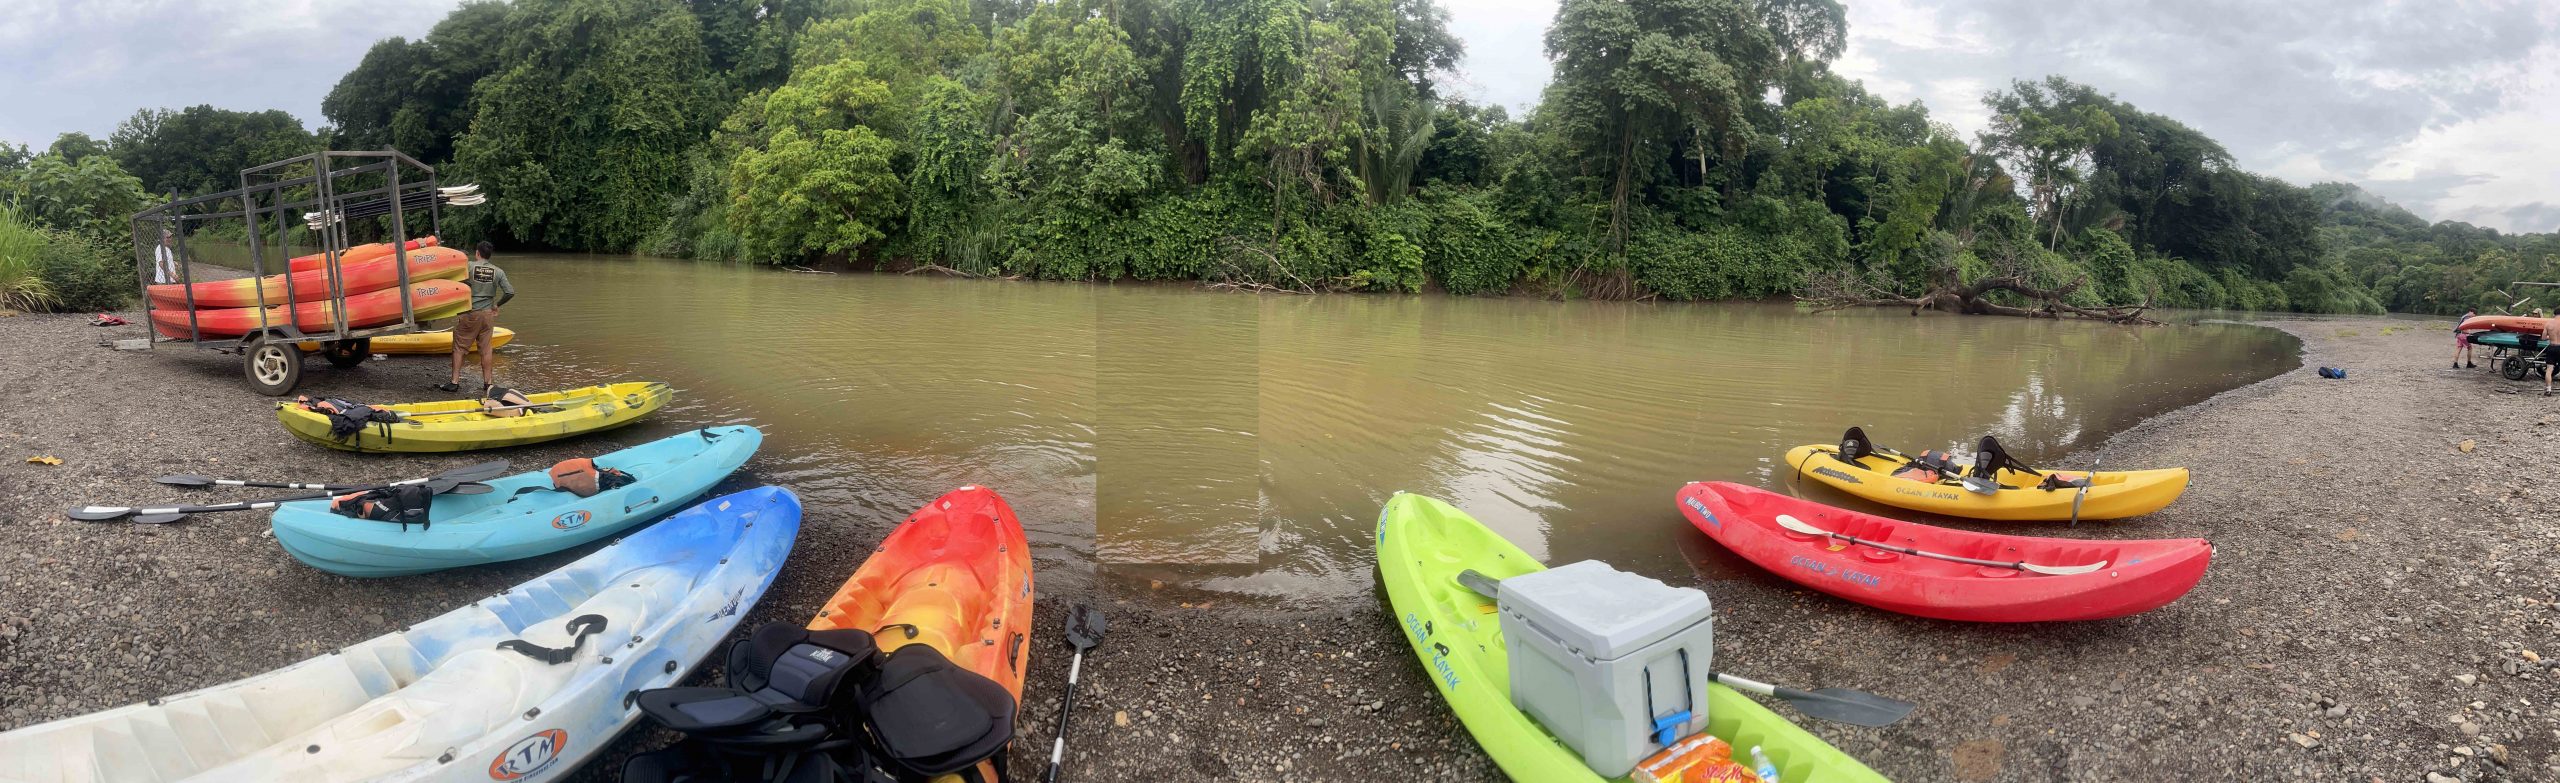 Our Kayaks on River Ora